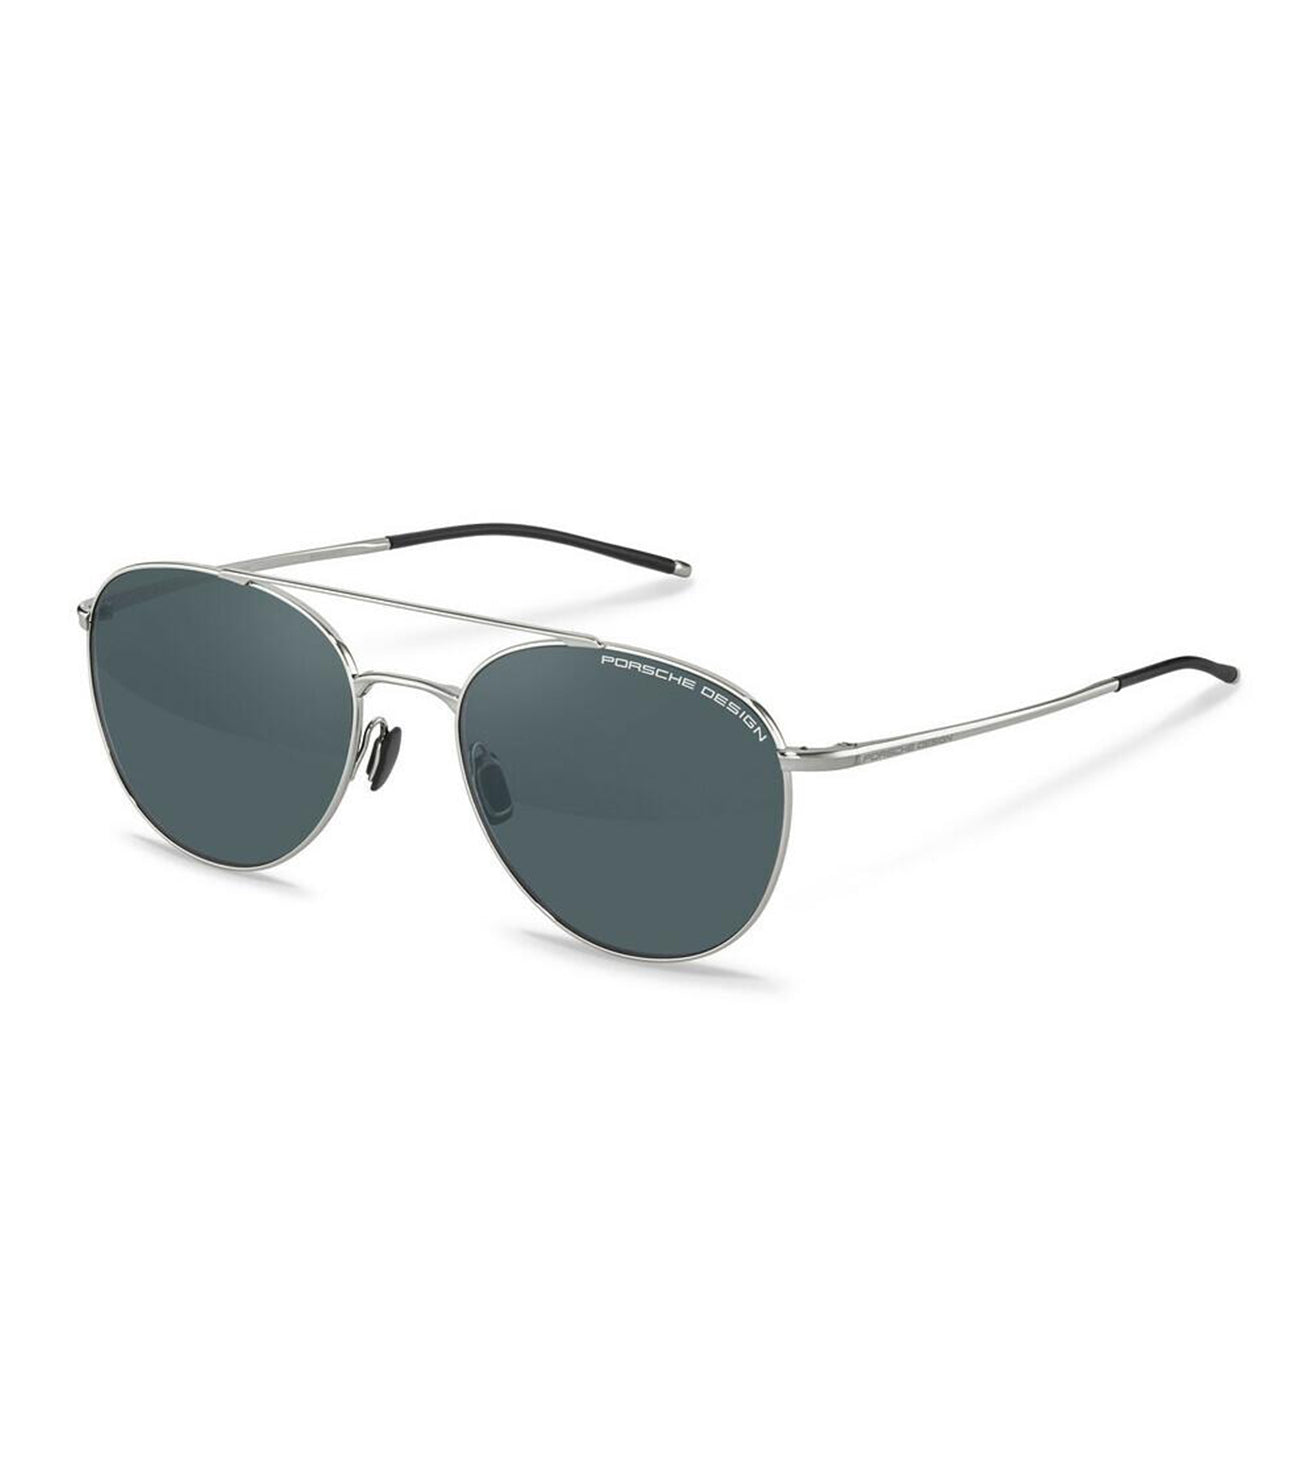 Porsche Design Unisex Blue/Black-mirrored Aviator Sunglasses